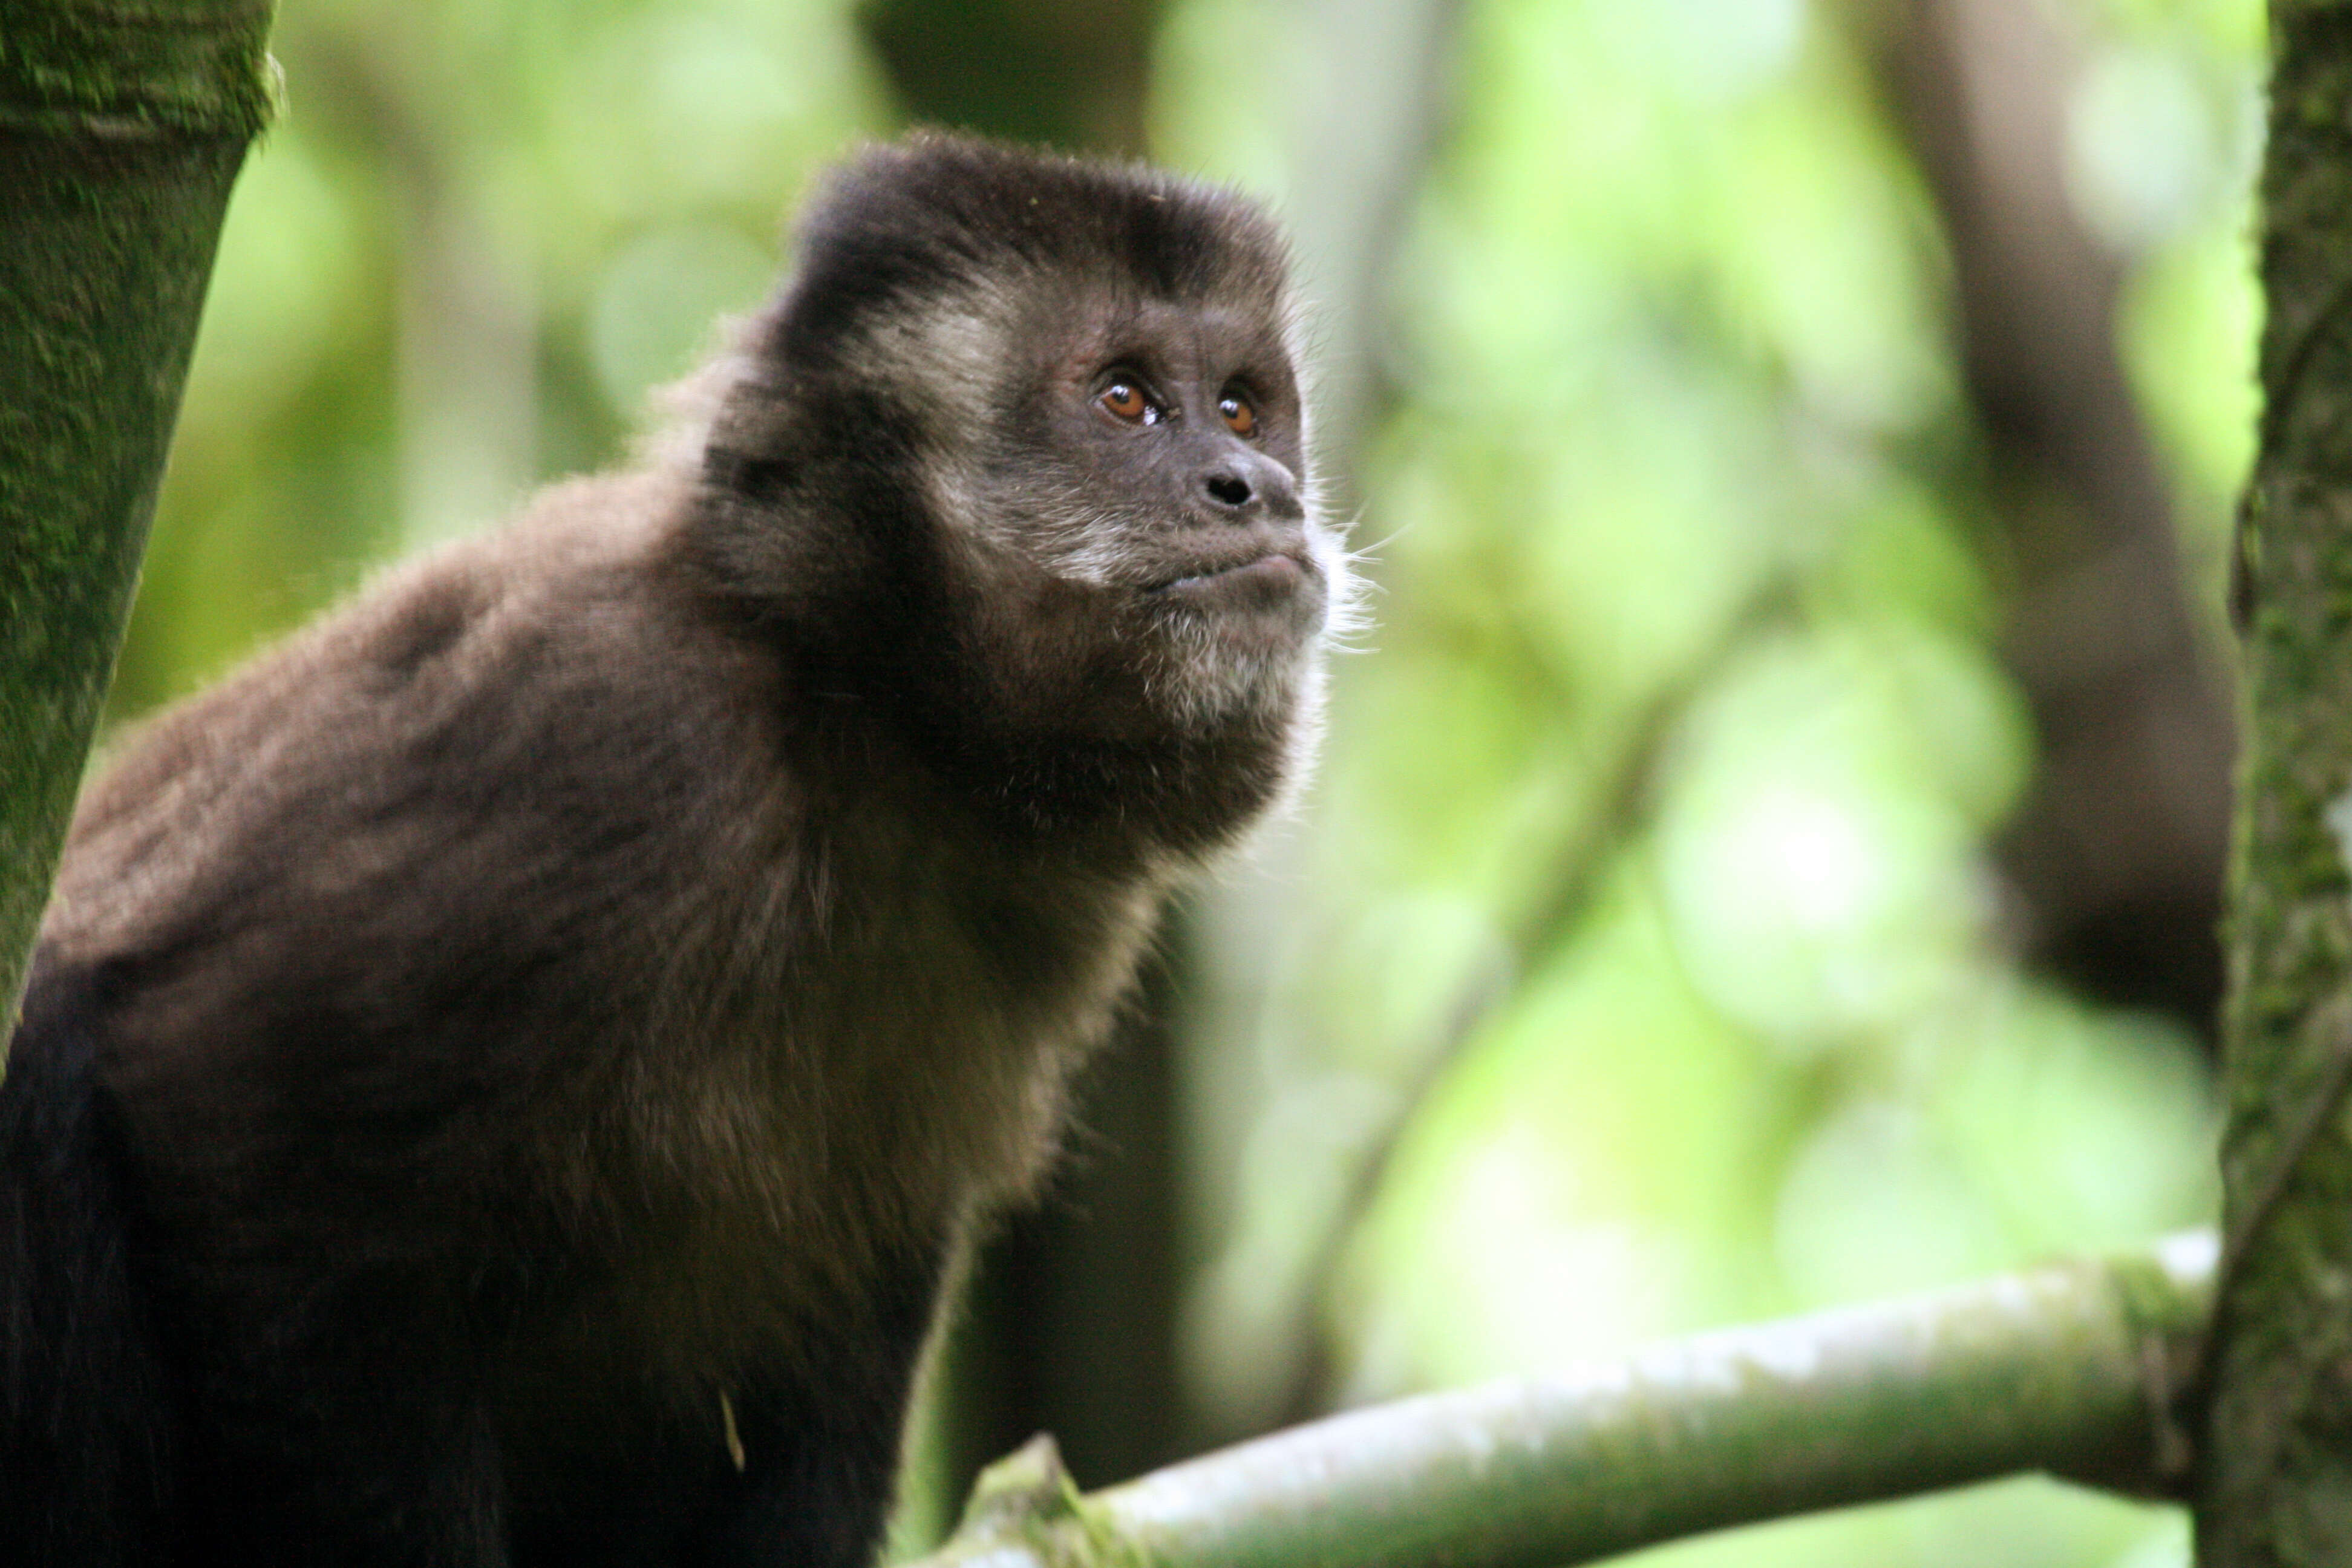 Image of Black Capuchin